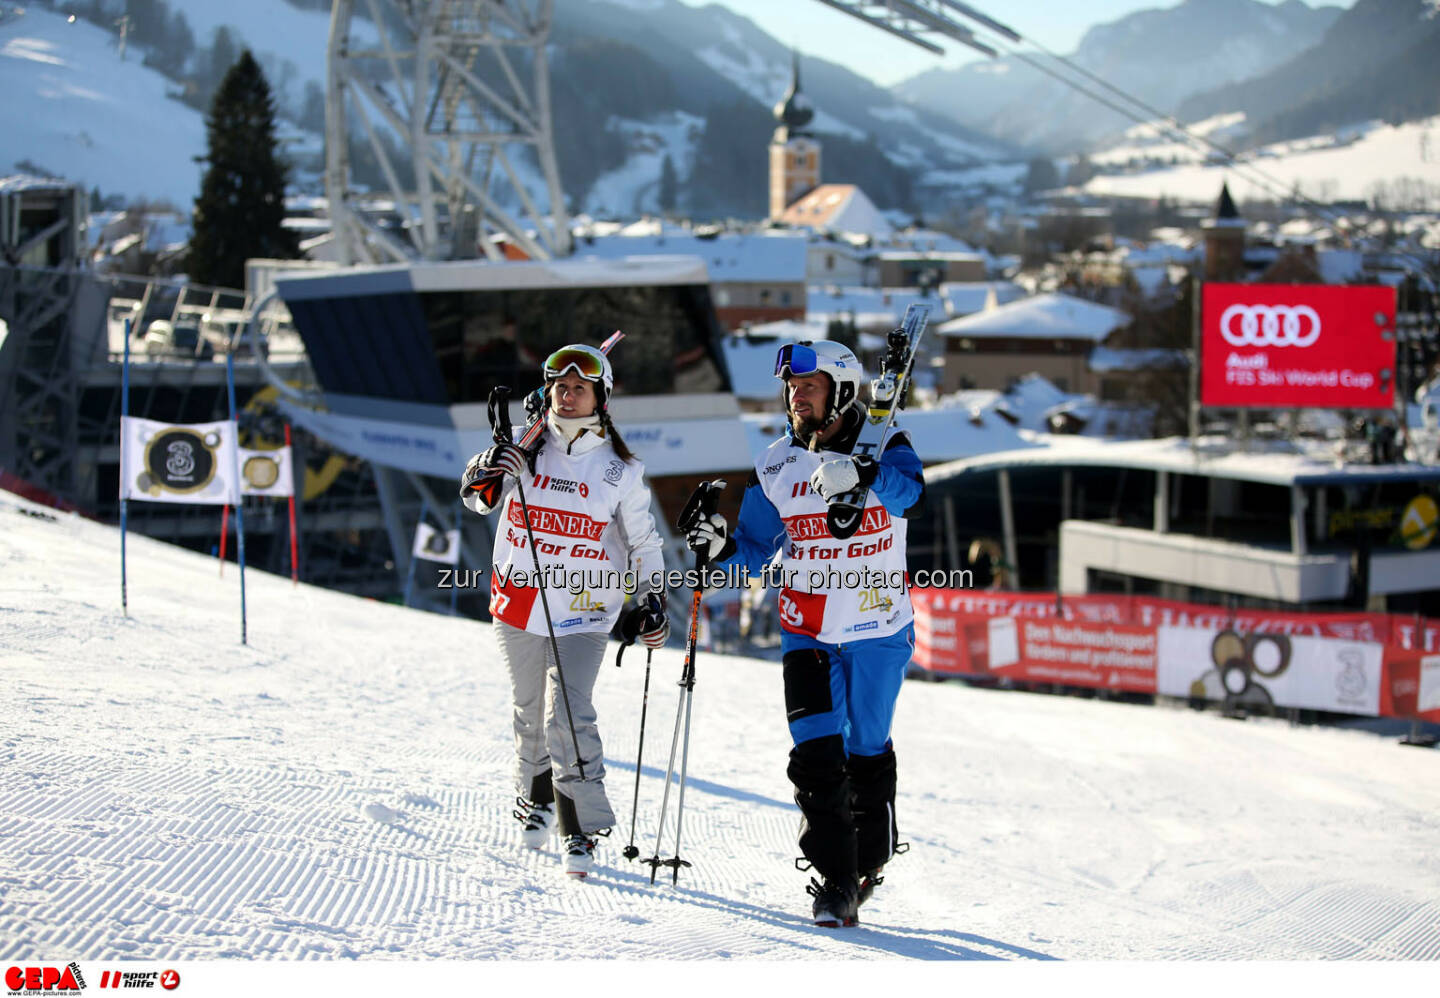 Ski for Gold Charity Race. Image shows Brigitte Kliment-Obermoser and Marco Buechel. Photo: GEPA pictures/ Daniel Goetzhaber